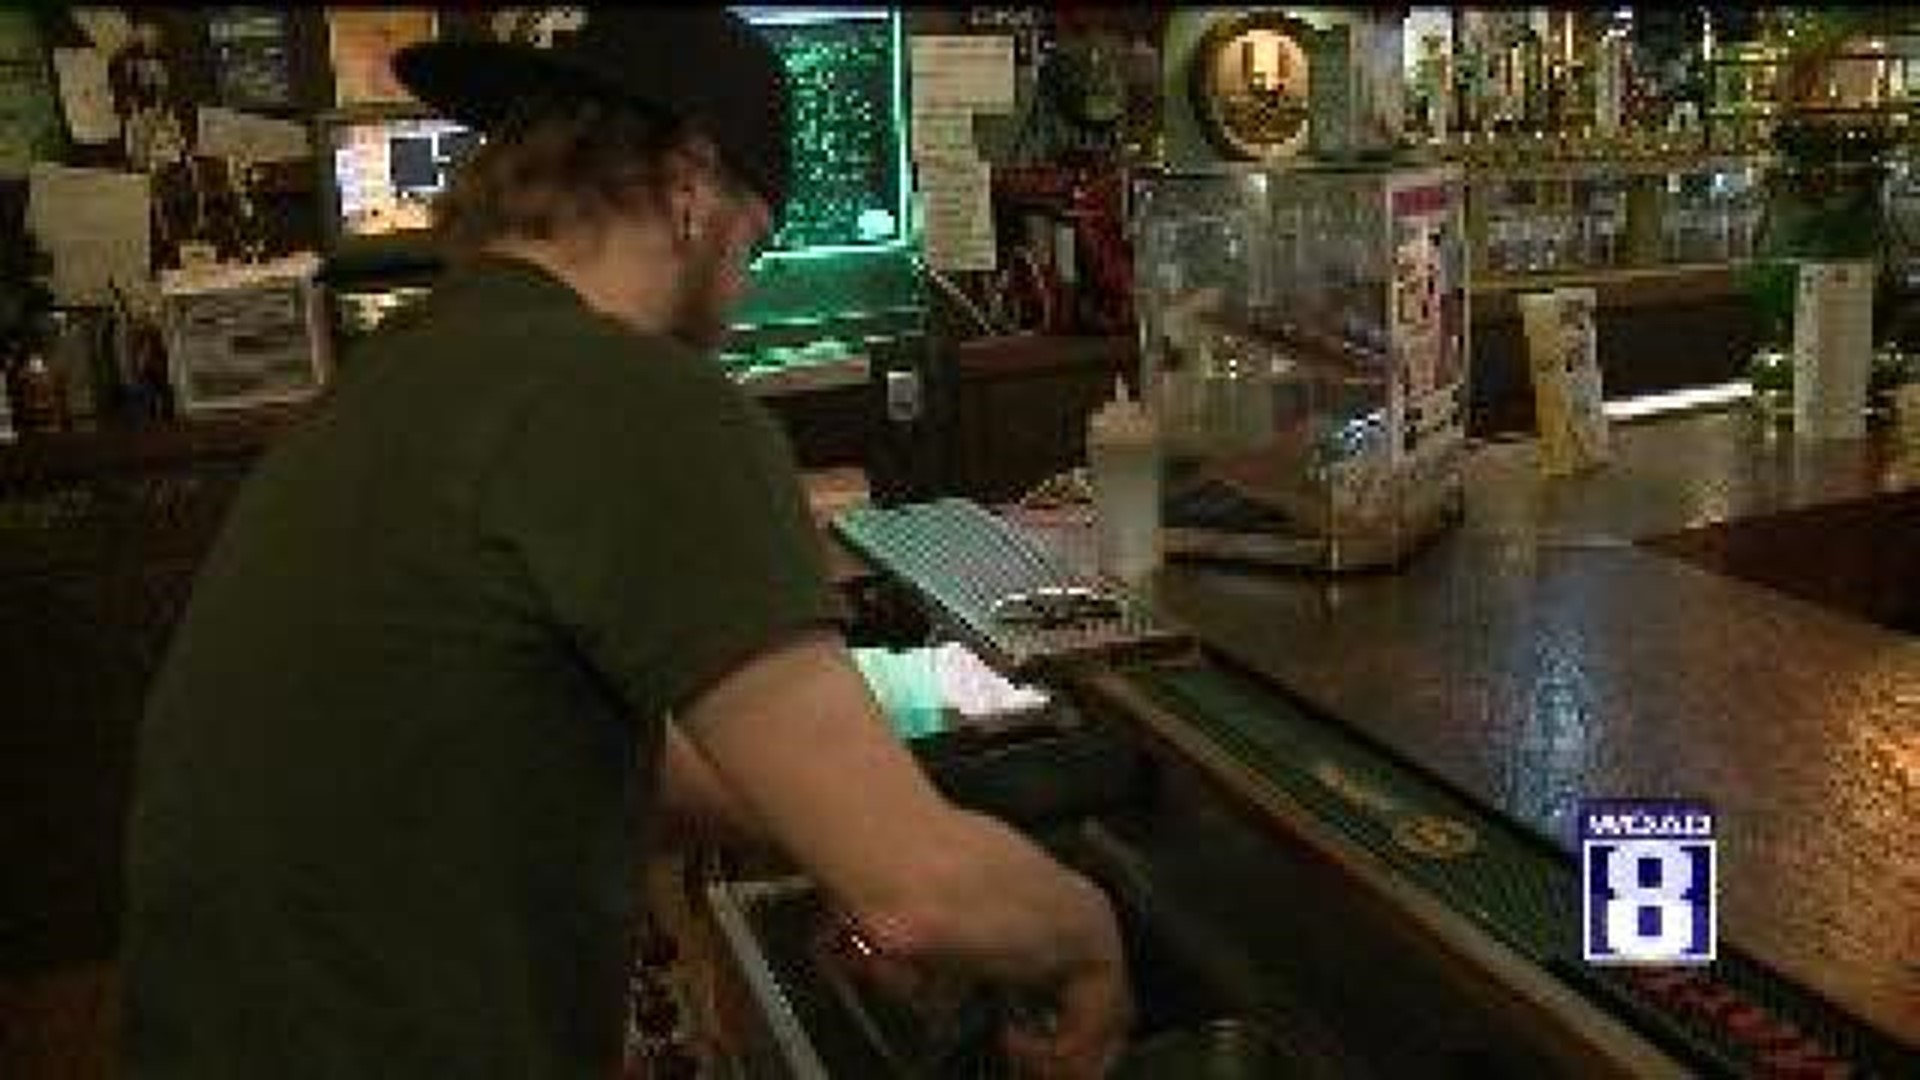 Local business unsure about minimum wage hike